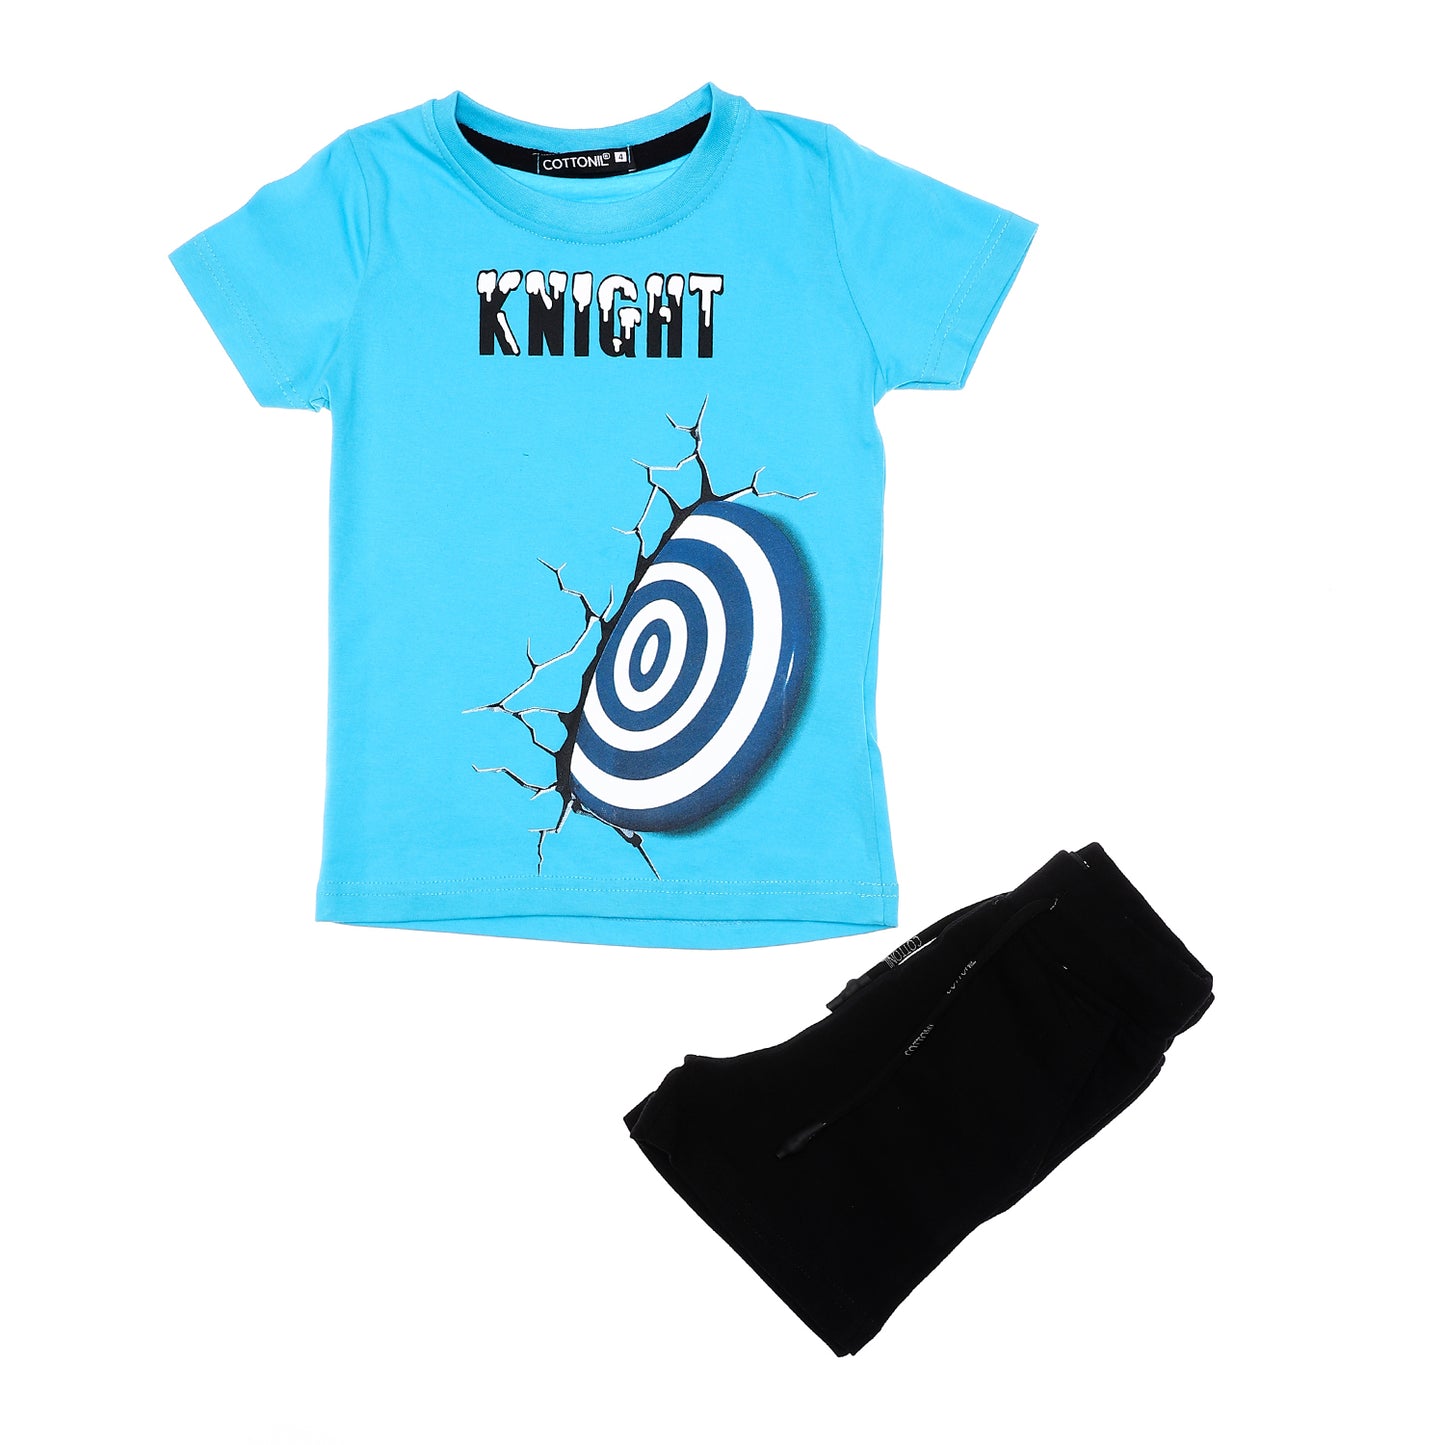 "Knight" Chest Printed Slip On Boys Pajama - Turquoise & Black